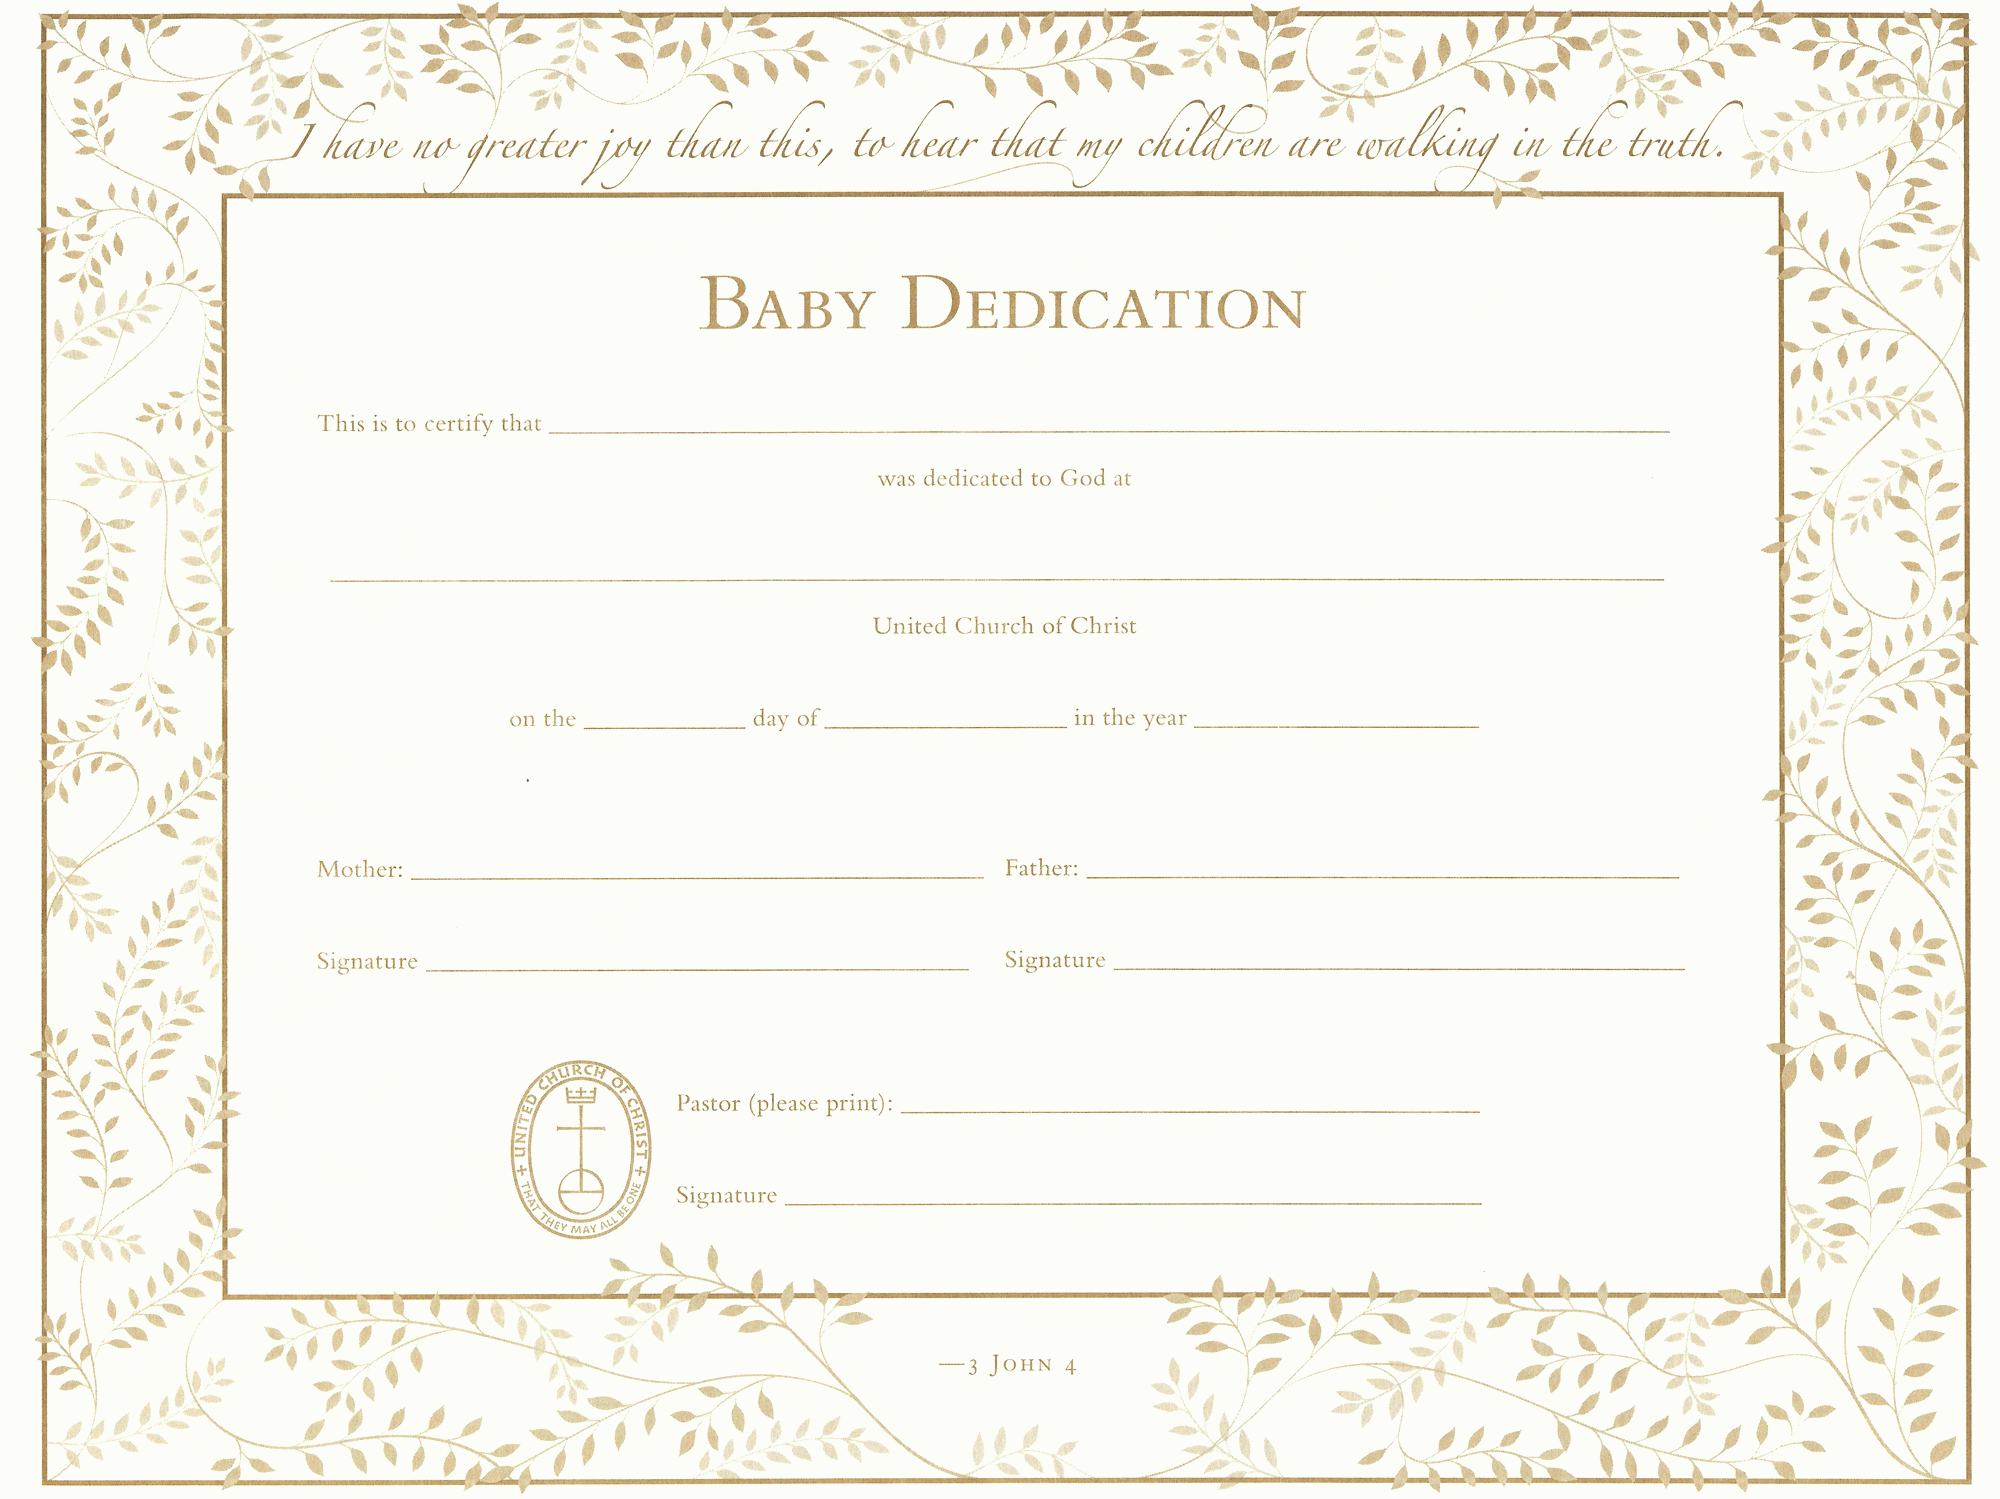 027 Template Ideas Baby Dedication Certificate Wonderful For Walking Certificate Templates